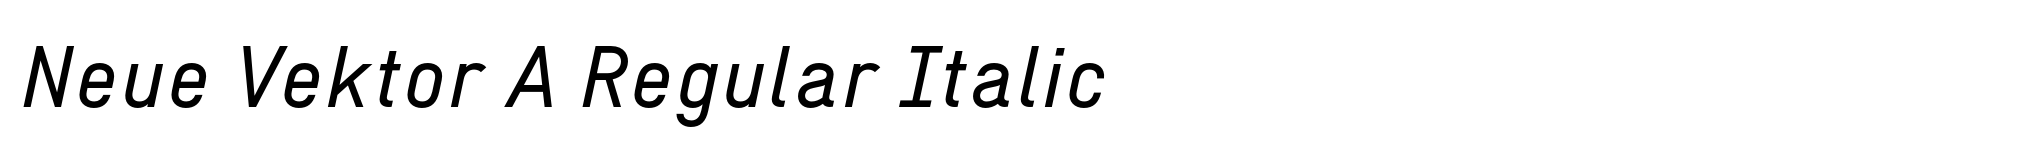 Neue Vektor A Regular Italic image